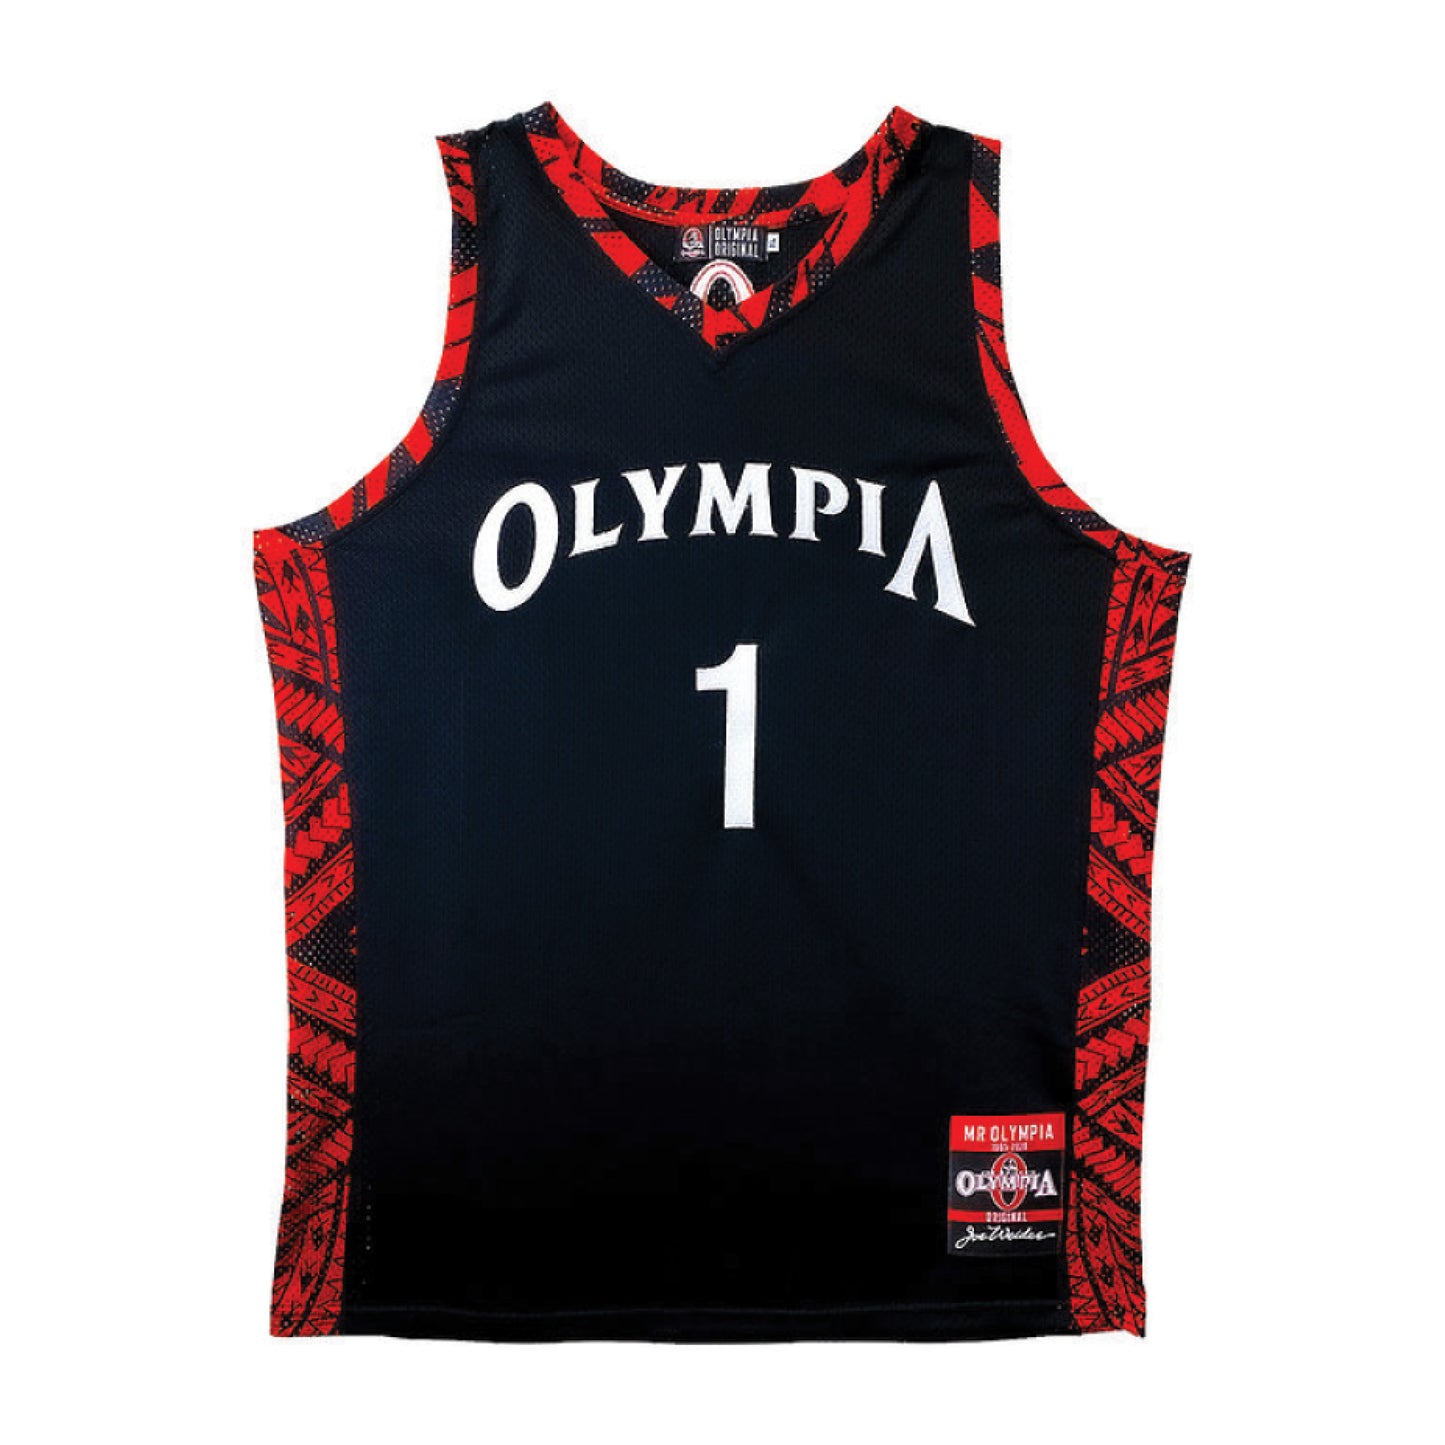 Olympia Basketball Jersey Tatau Print